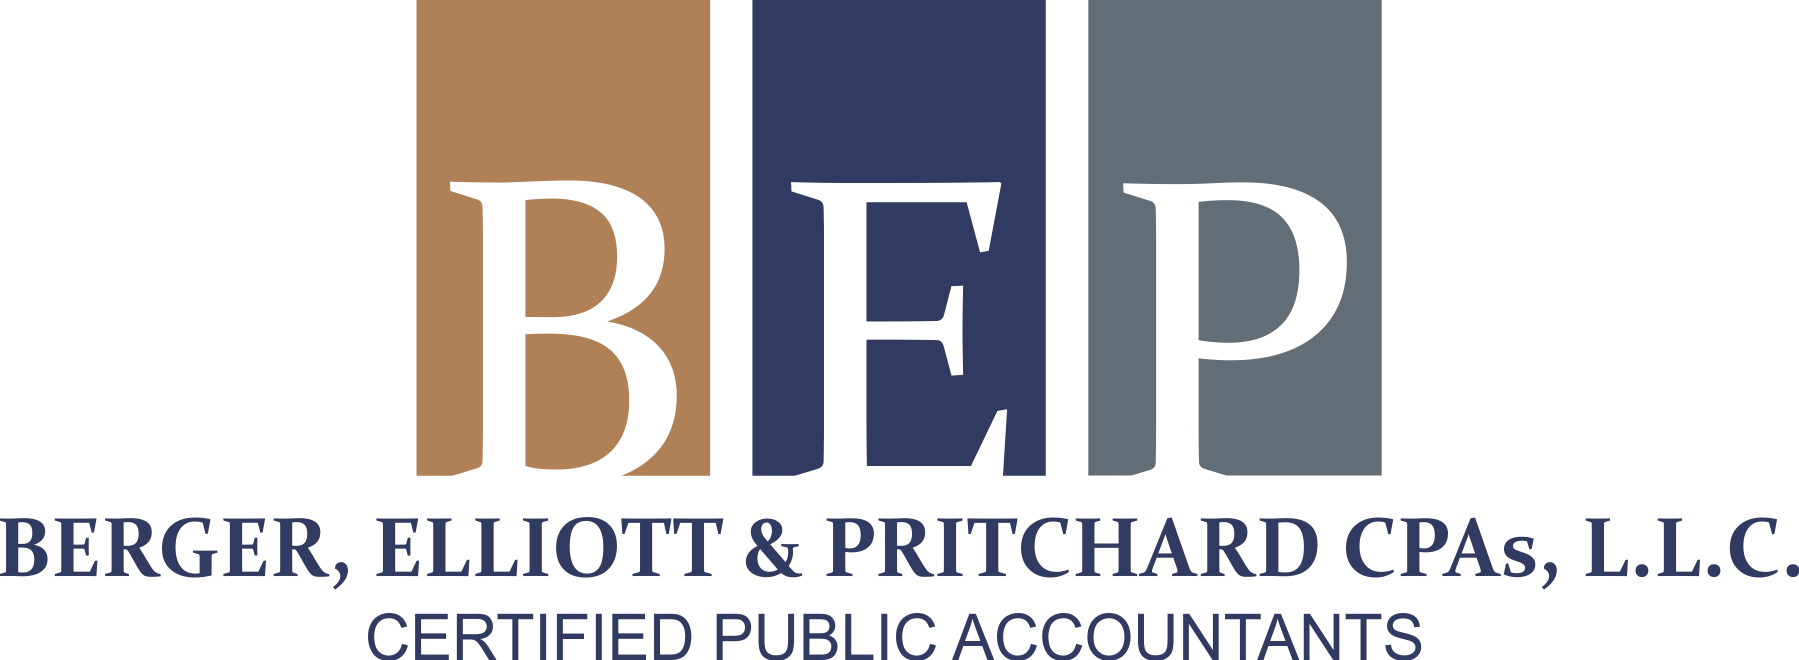 Berger Logo - Berger, Elliott & Pritchard